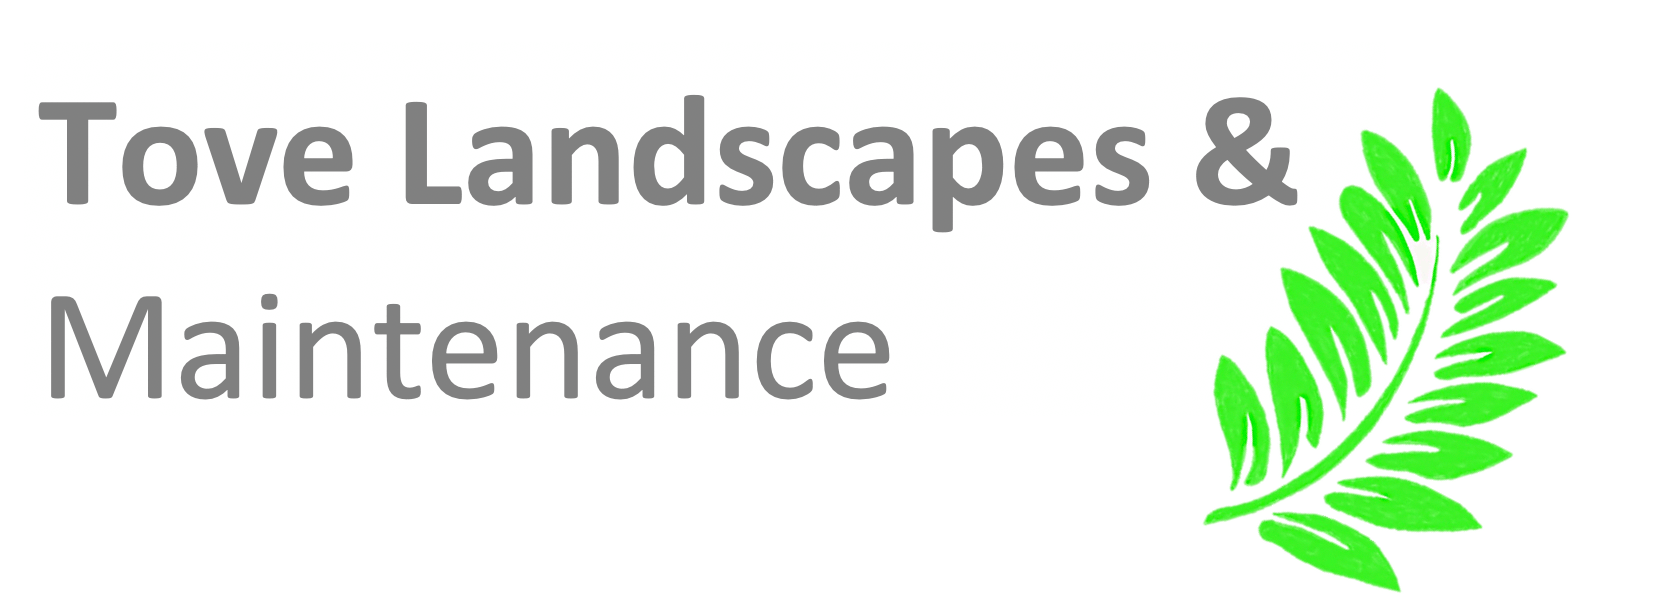 Tove Landscape & Maintenance Logo